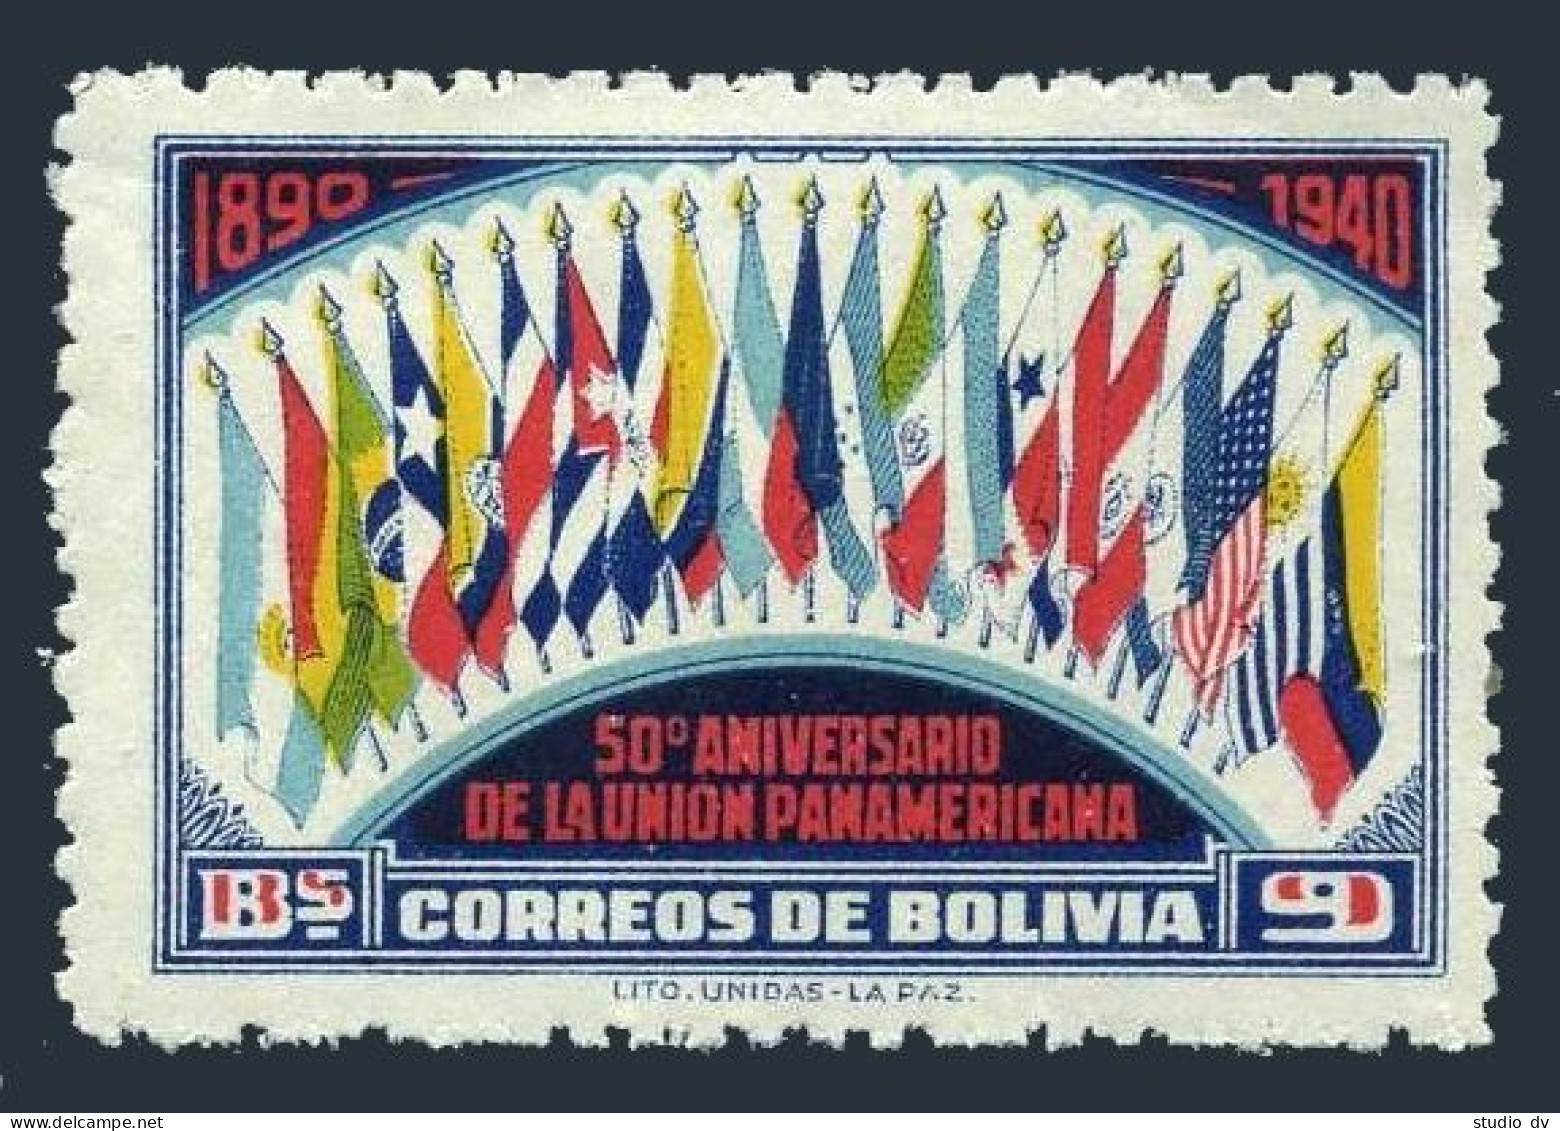 Bolivia 269,MNH.Michel 320. Pan American Union,50th Ann.1940.Flags. - Bolivien